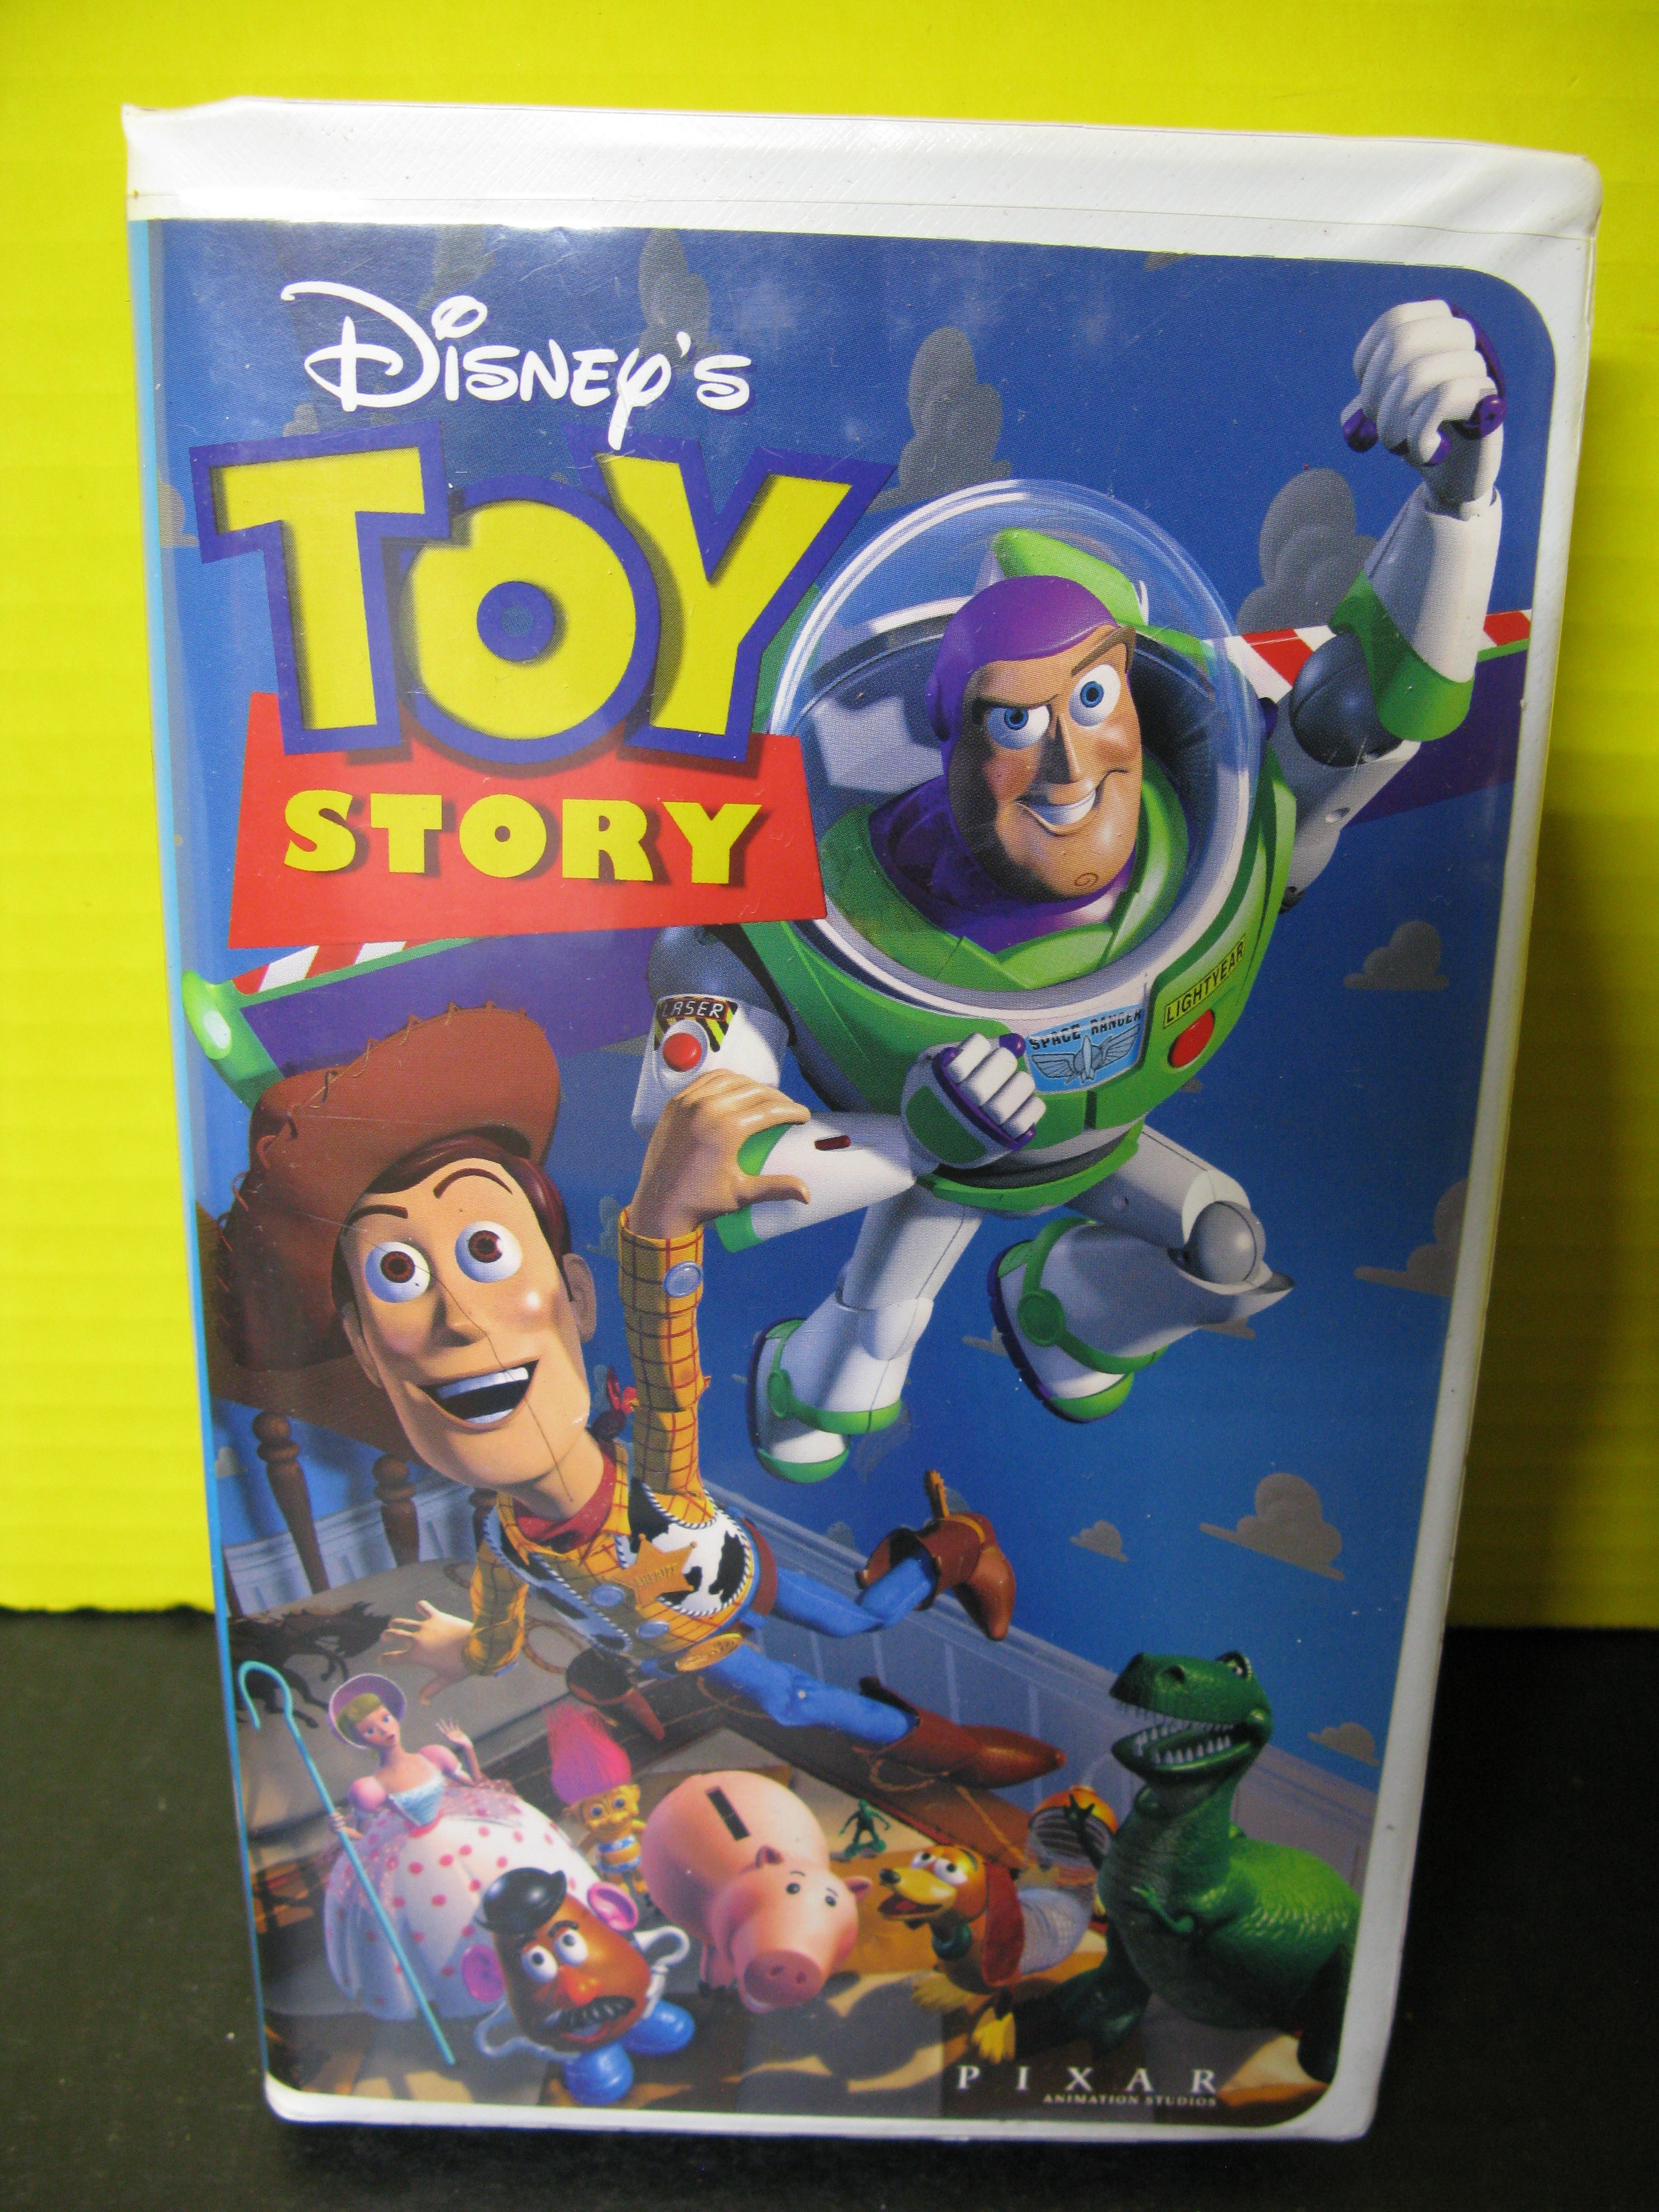 Disney's Toy Story VHS — The Pop Culture Antique Museum